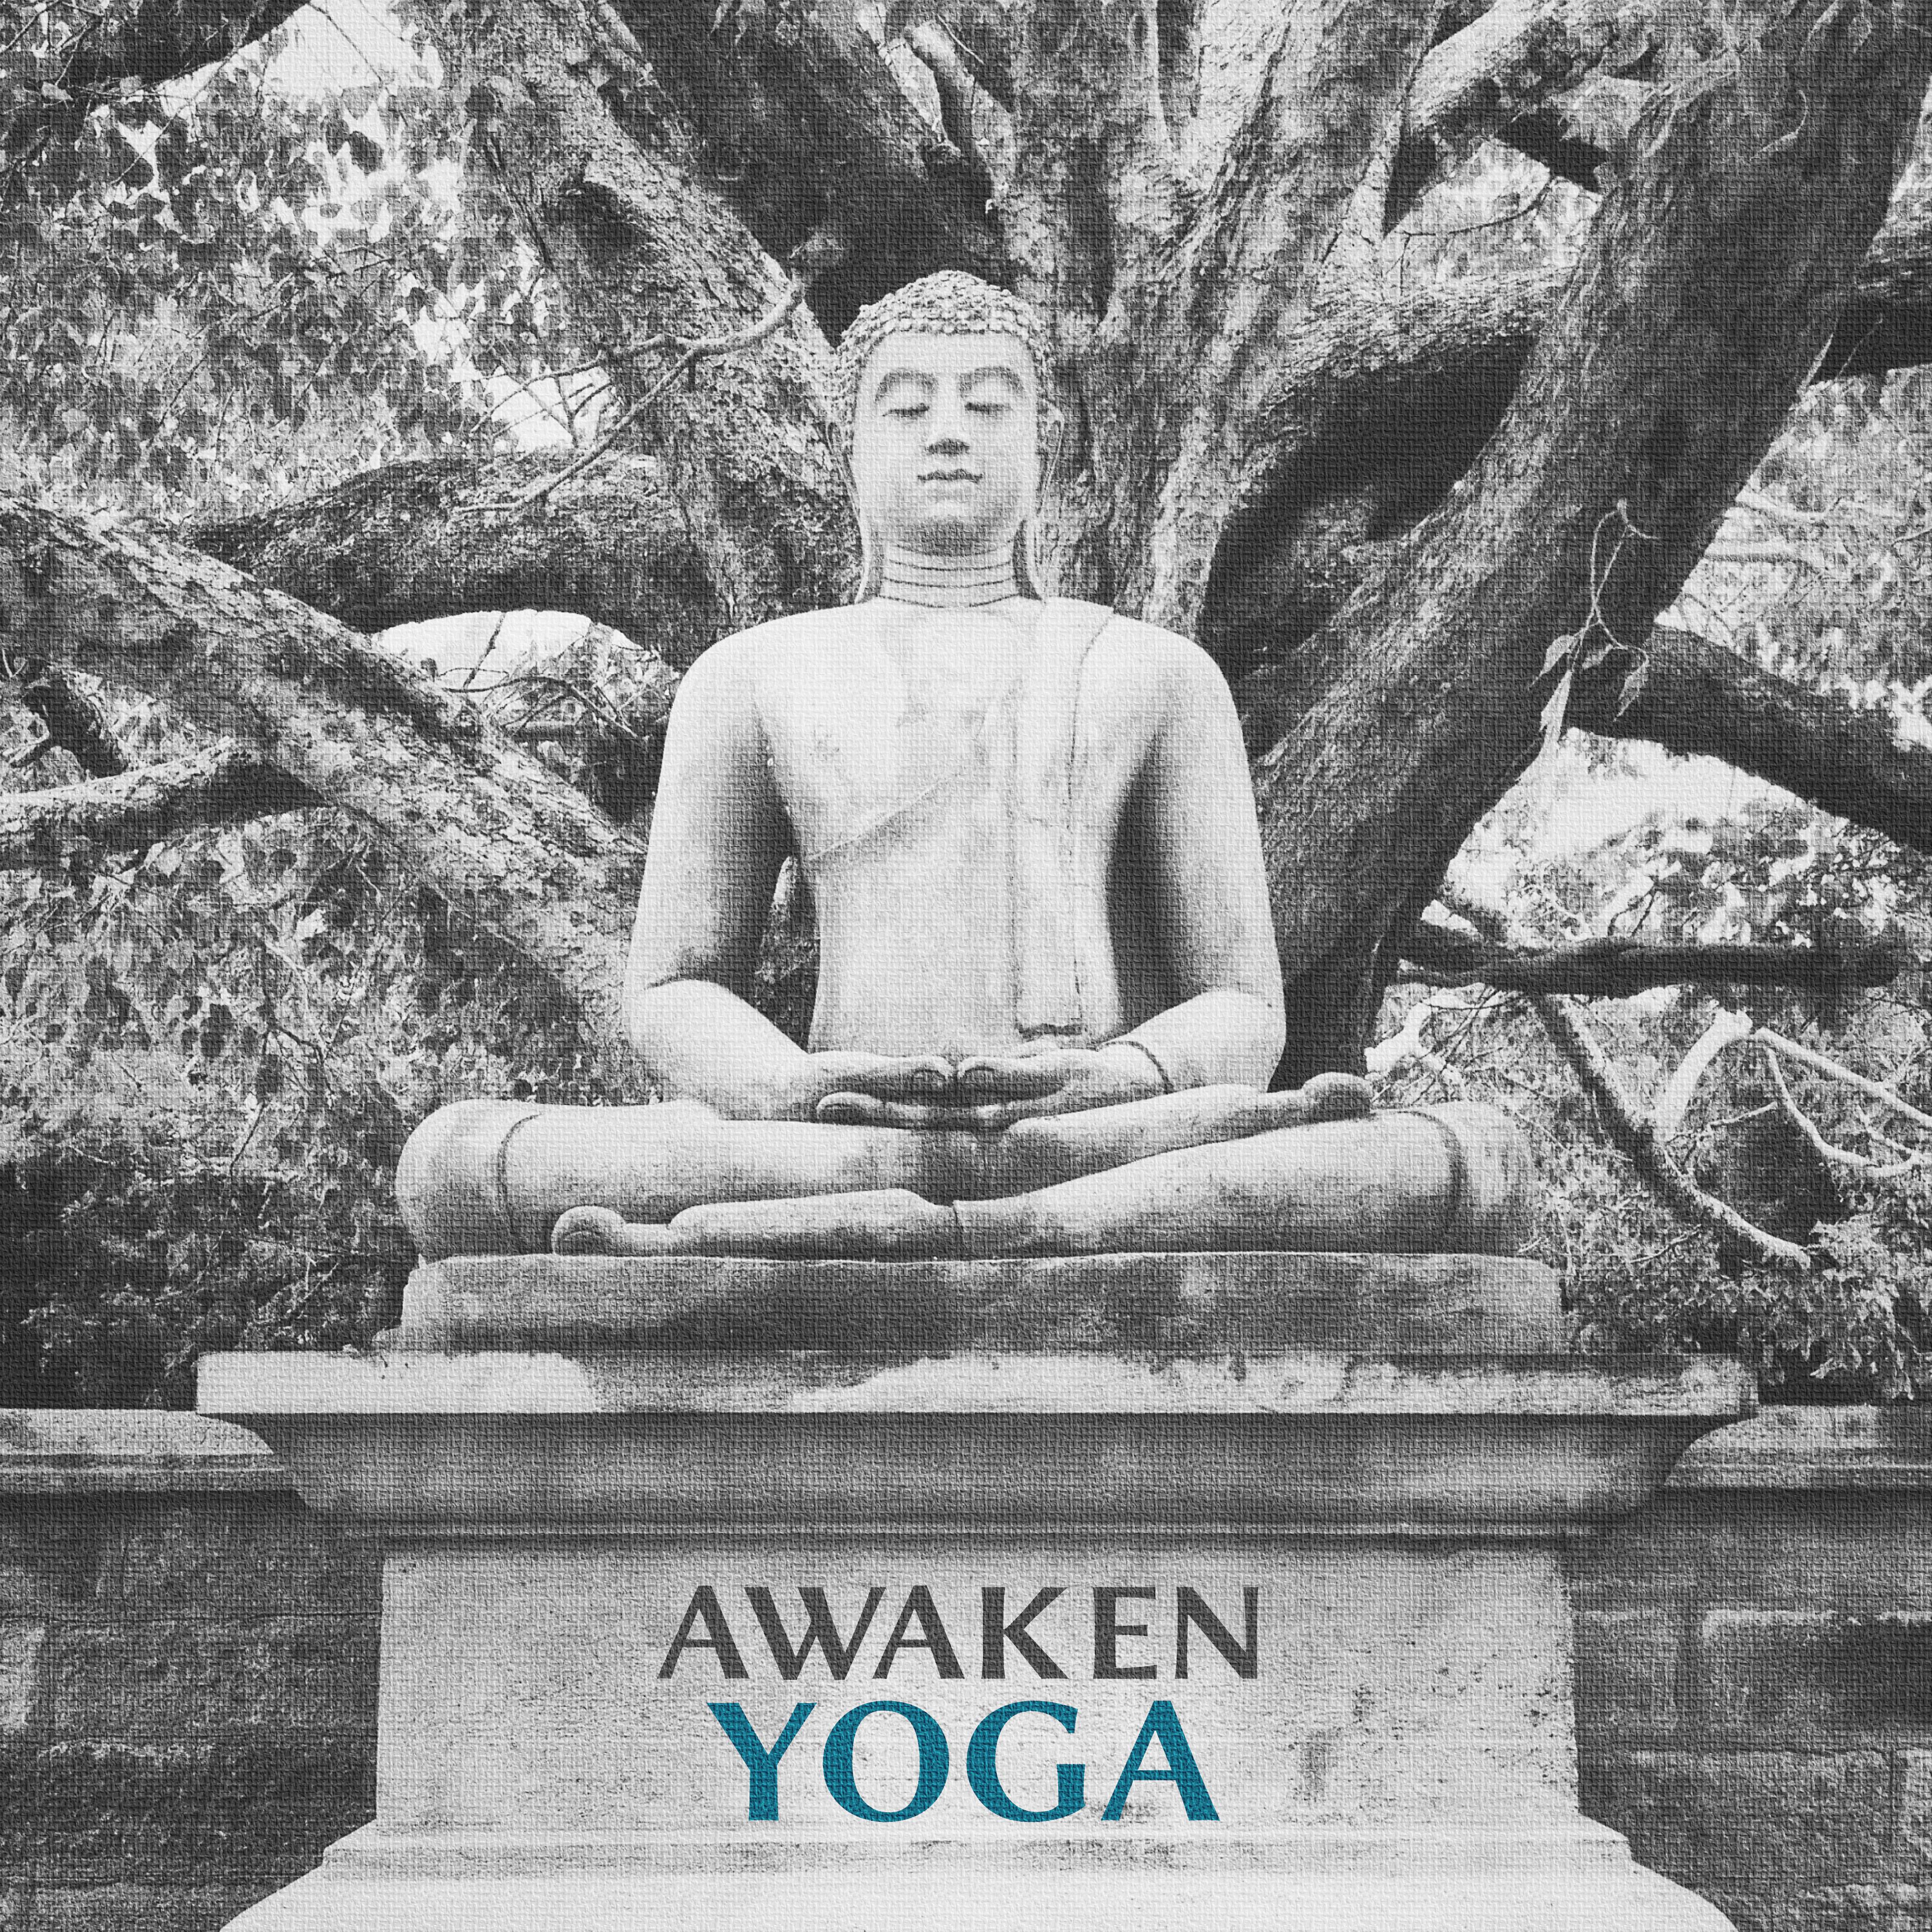 Awaken Yoga Relaxation Music for Yoga, Meditation, Calmimg Sounds of Nature, Yoga Music, Deep Meditation Music